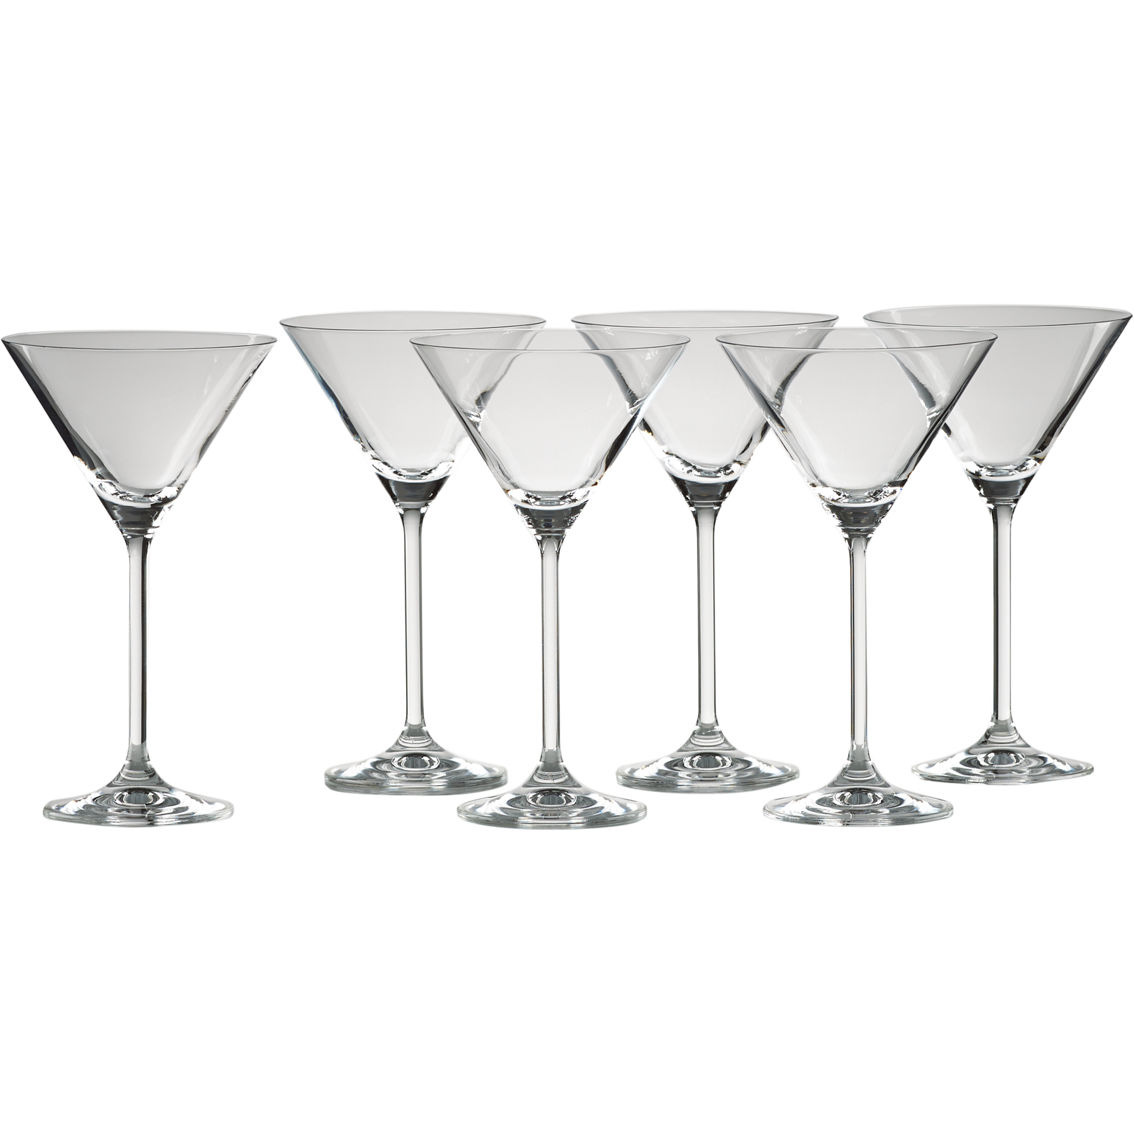 Lenox Tuscany Classics 6 pc. Martini Glass Set - Image 3 of 3